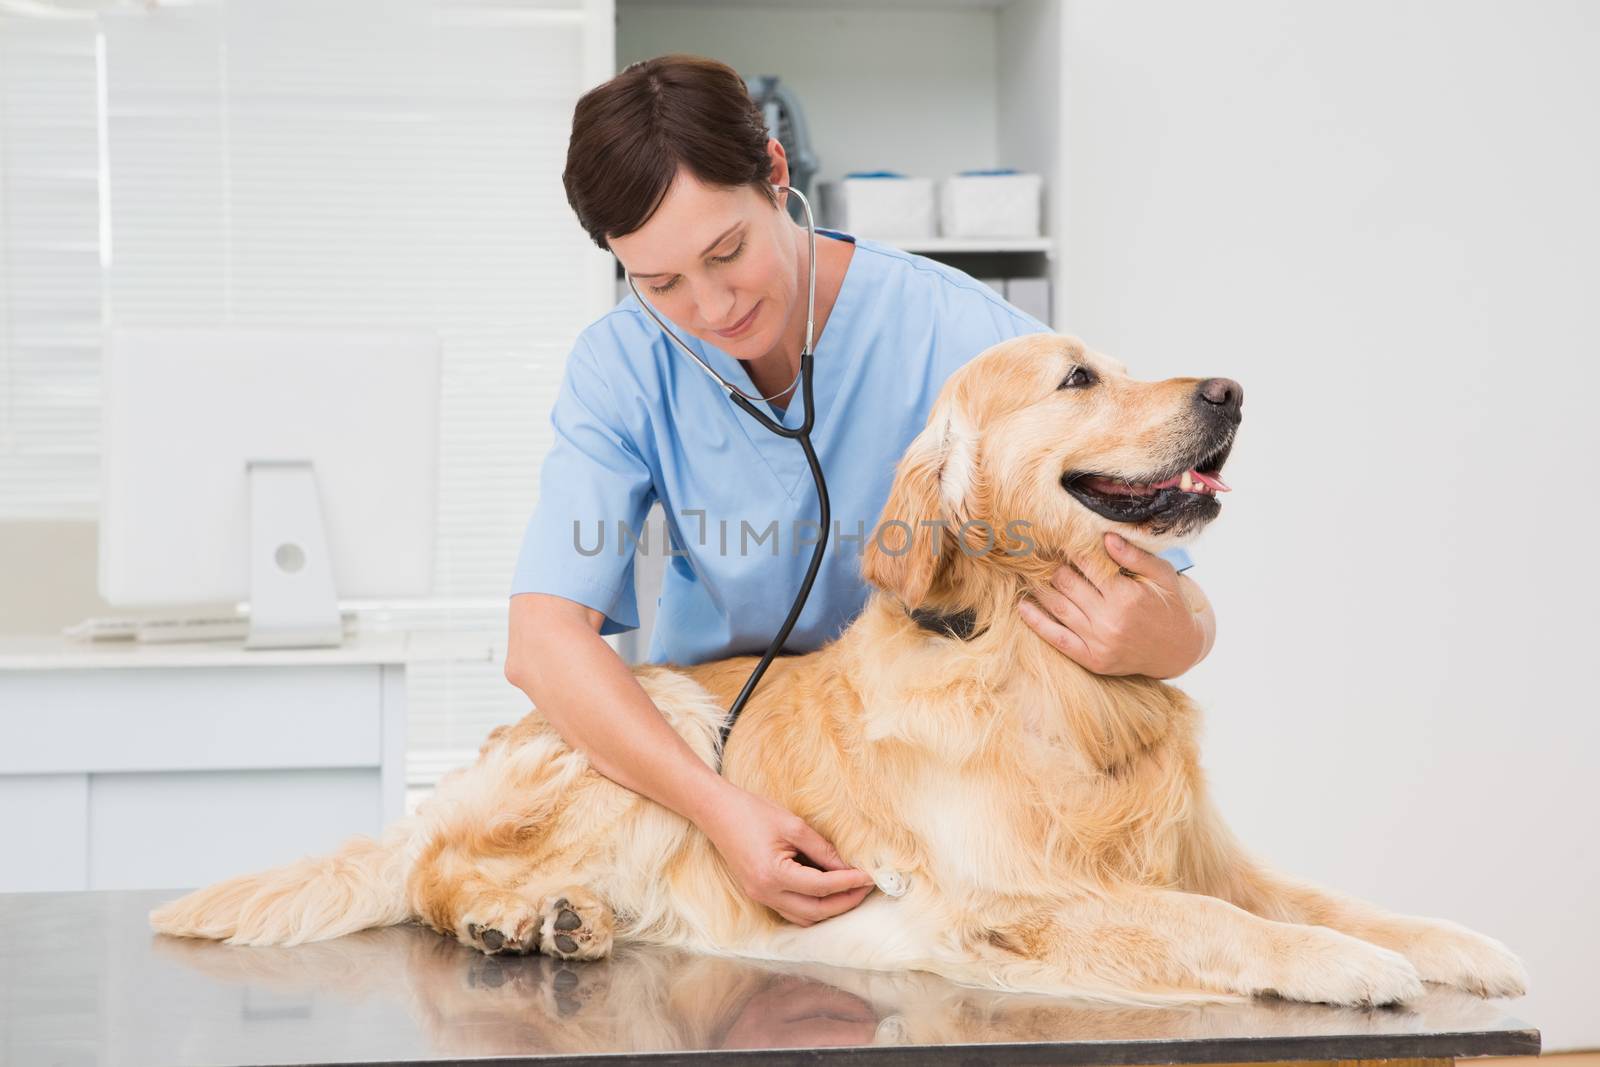 Veterinarian examining a cute dog with a stethoscope  by Wavebreakmedia